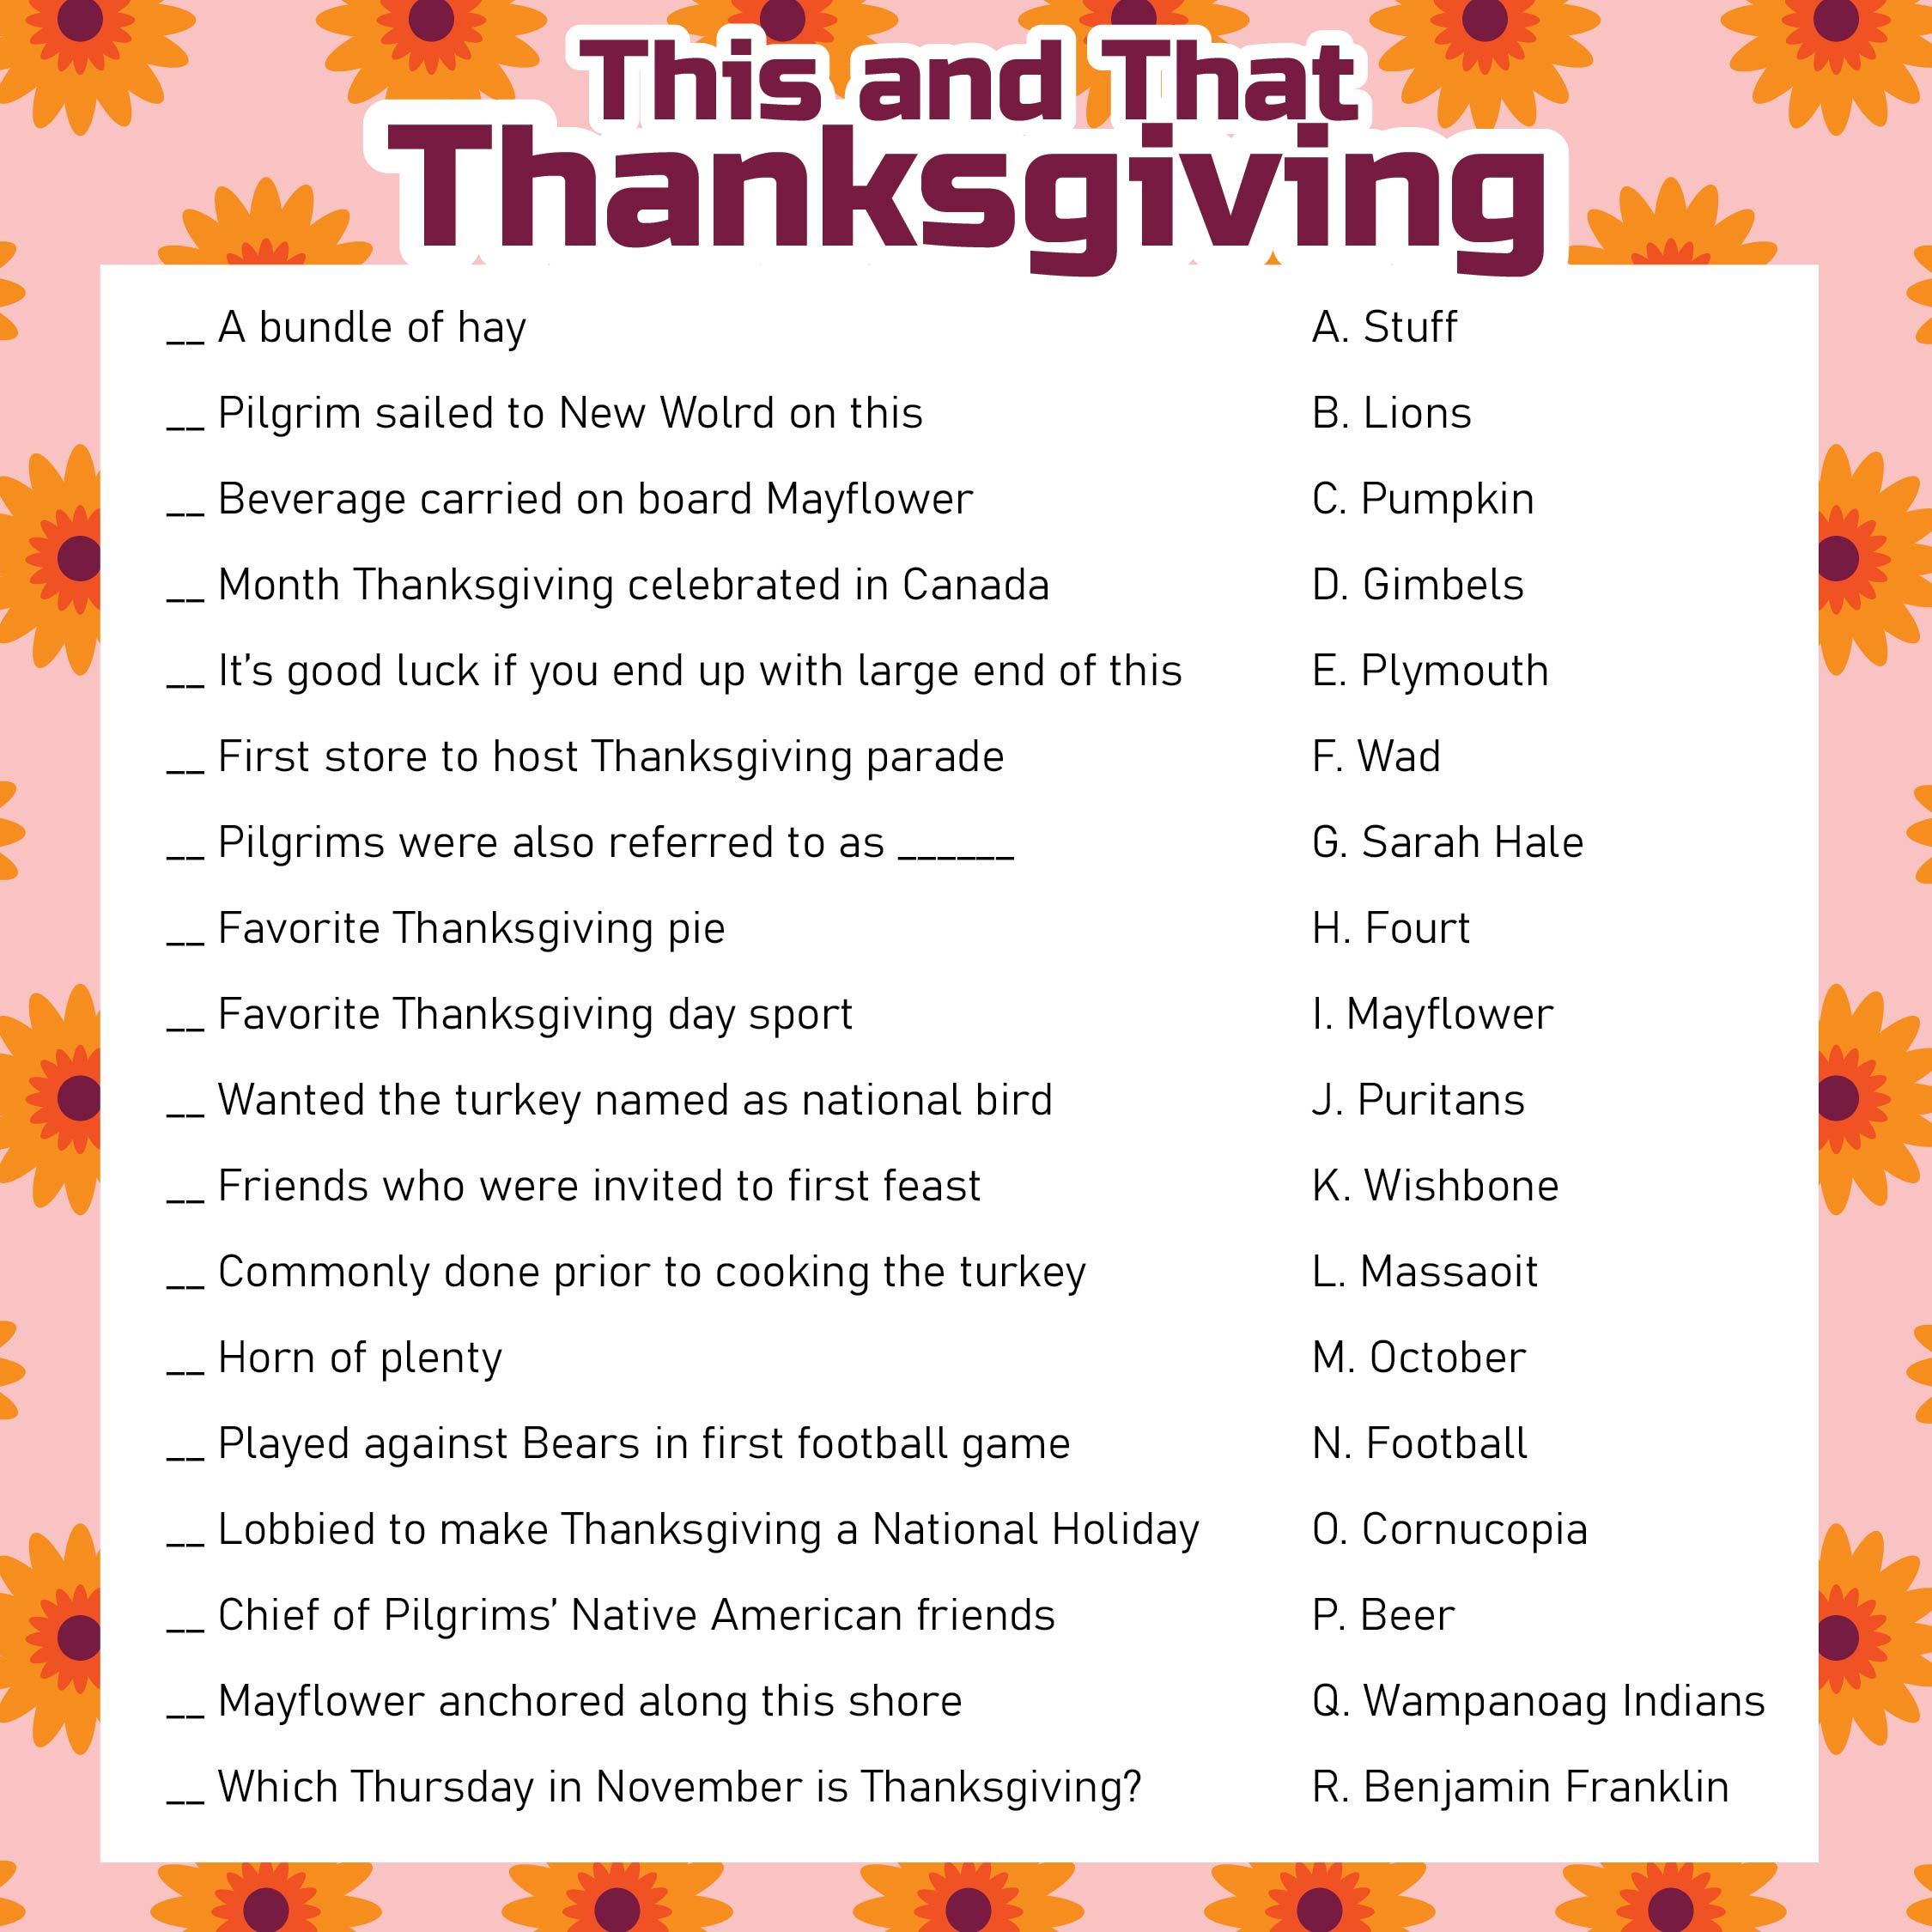 Free Printable Thanksgiving Trivia - Printable Templates by Nora